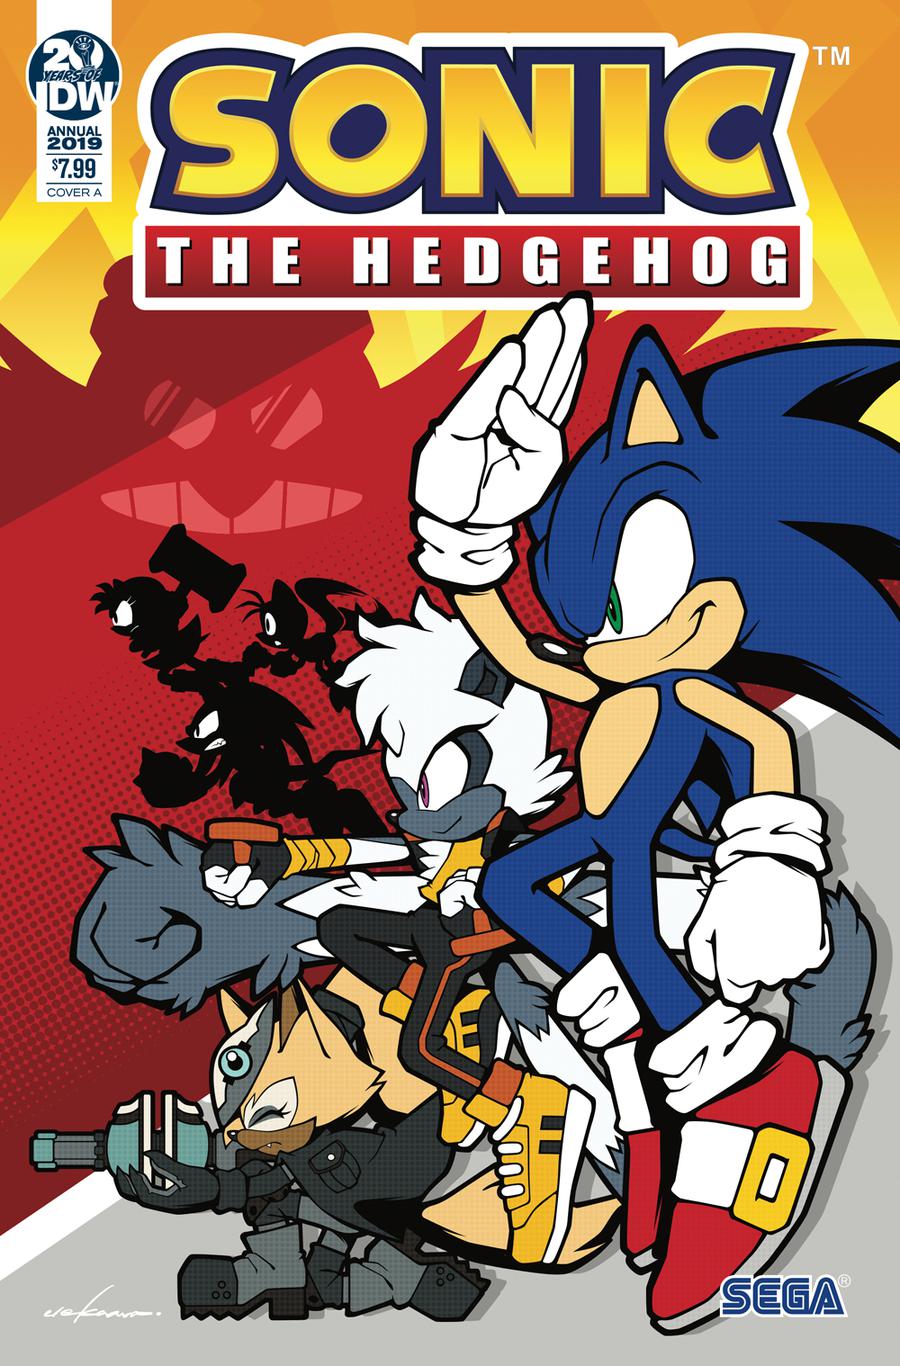 Sonic The Hedgehog Vol 3 Annual 2019 Cover A Regular Yuji Uekawa Of Sonic Team Cover